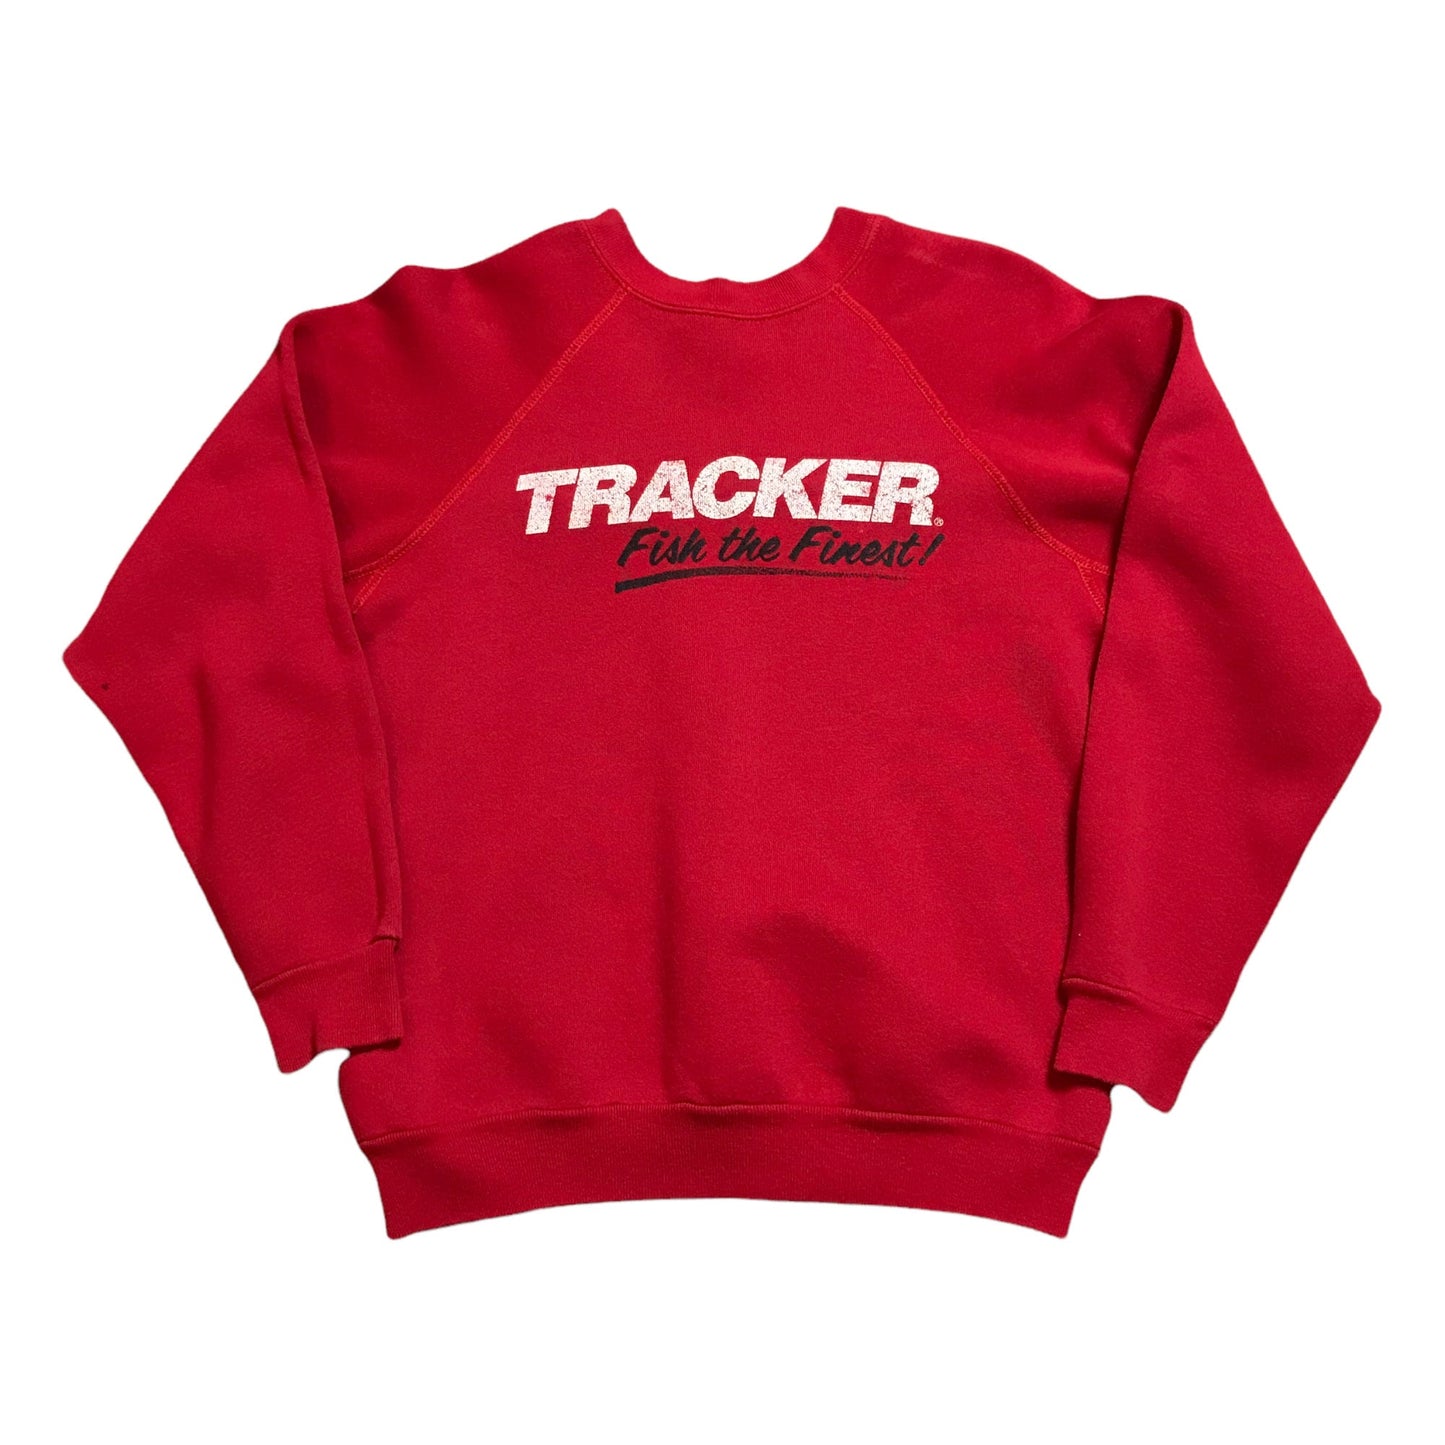 1980s/1990s Tracker Boats Fish the Finest Raglan Sweatshirt Made in USA Size S/M